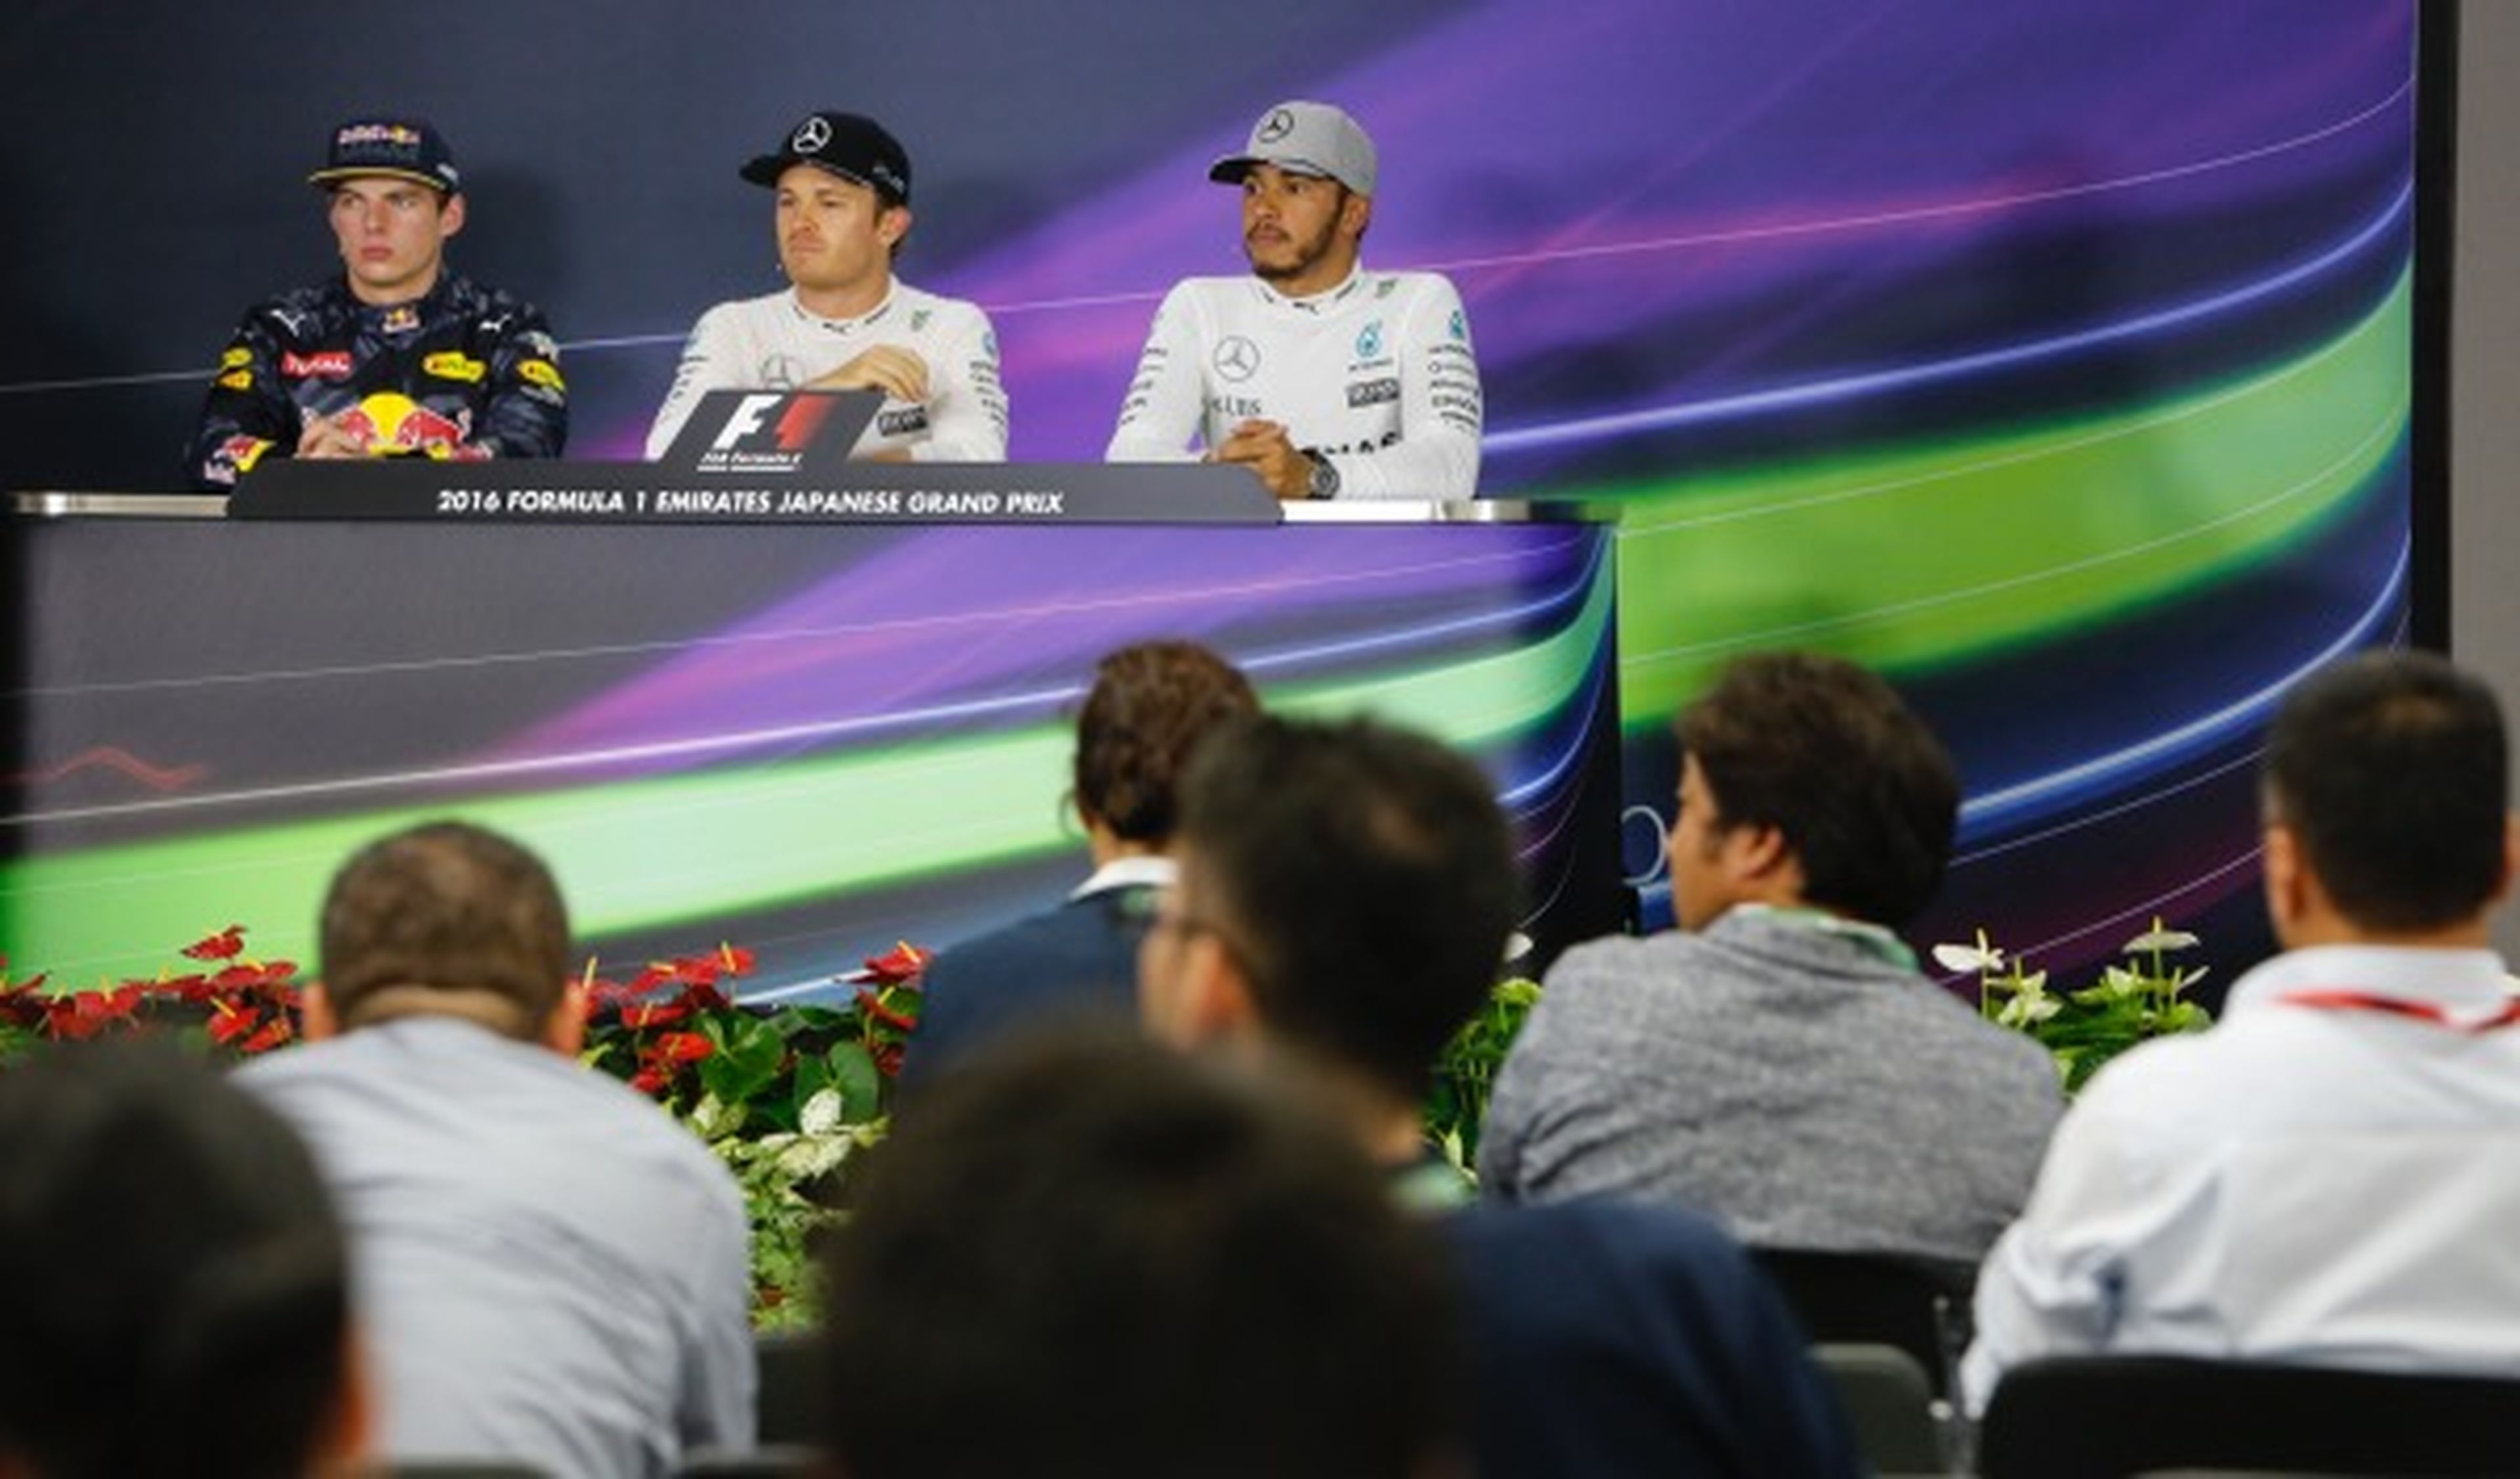 Rueda de prensa, Suzuka, 2016, Verstappen, Rosberg, Hamilton